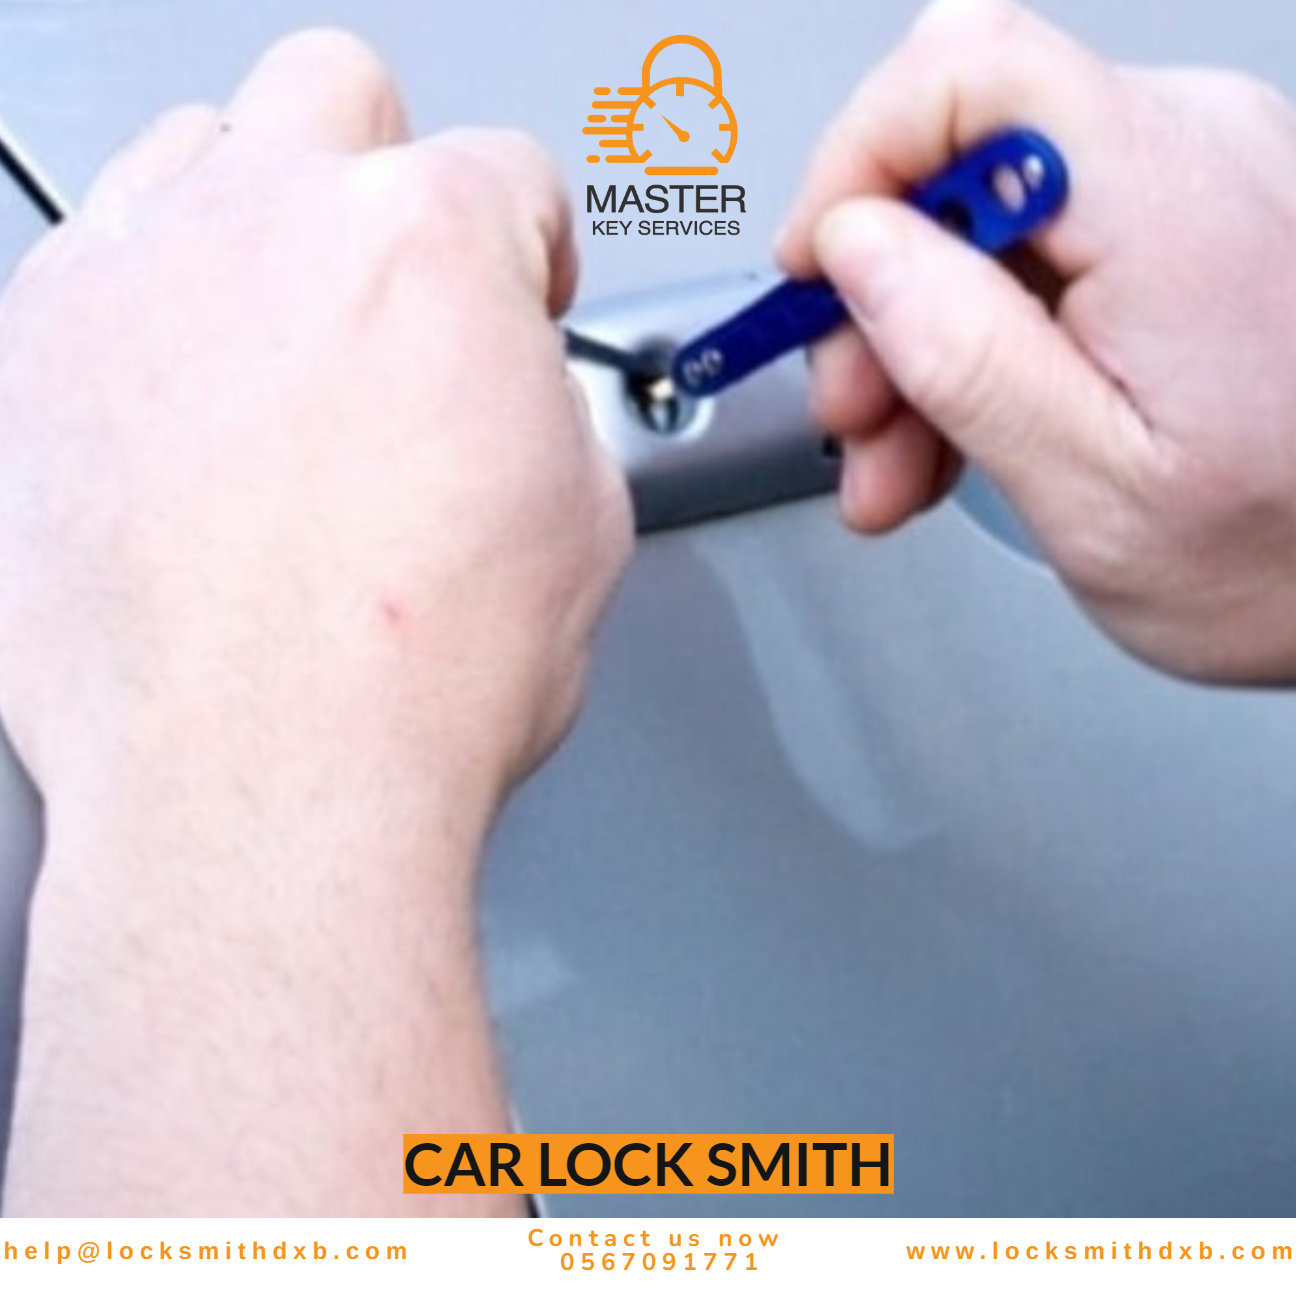 Car lock smith